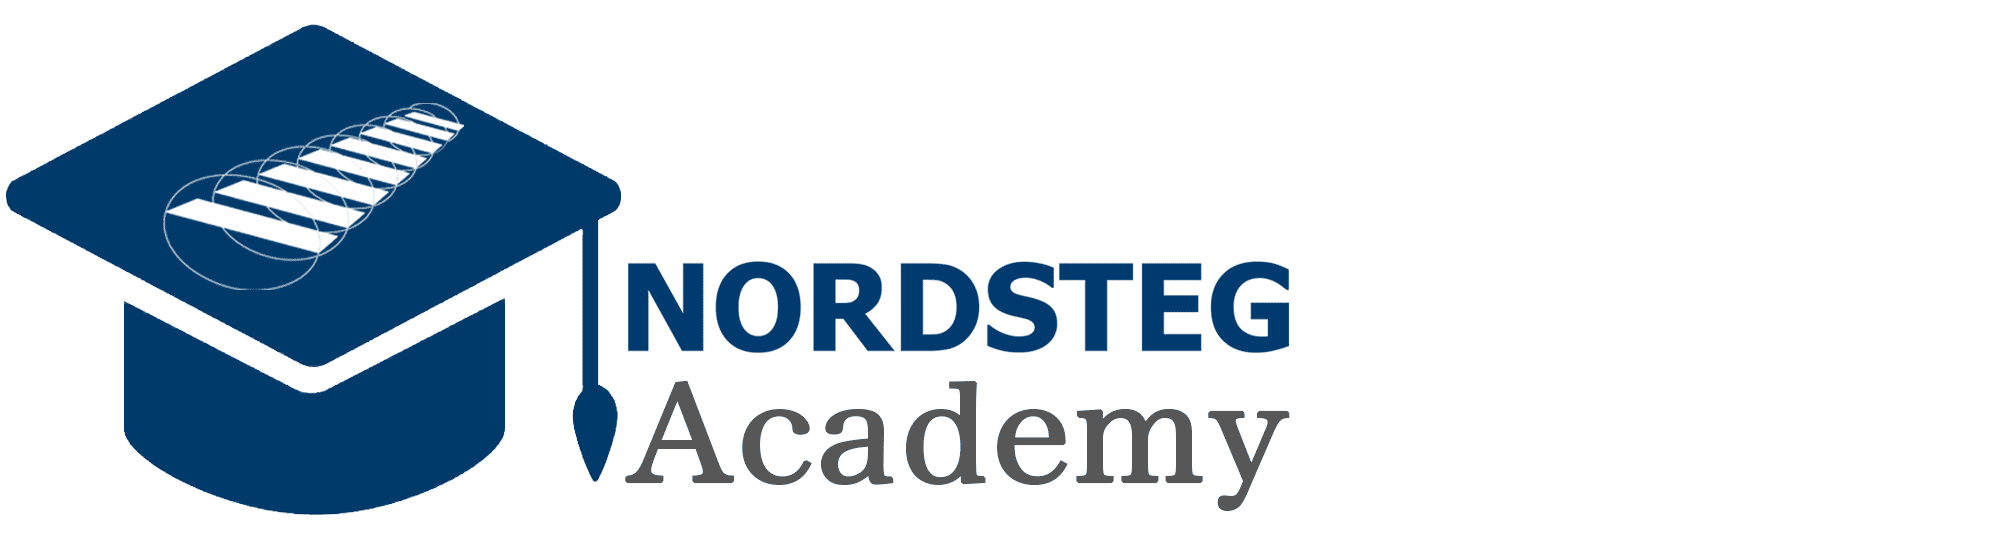 Nordsteg Academy